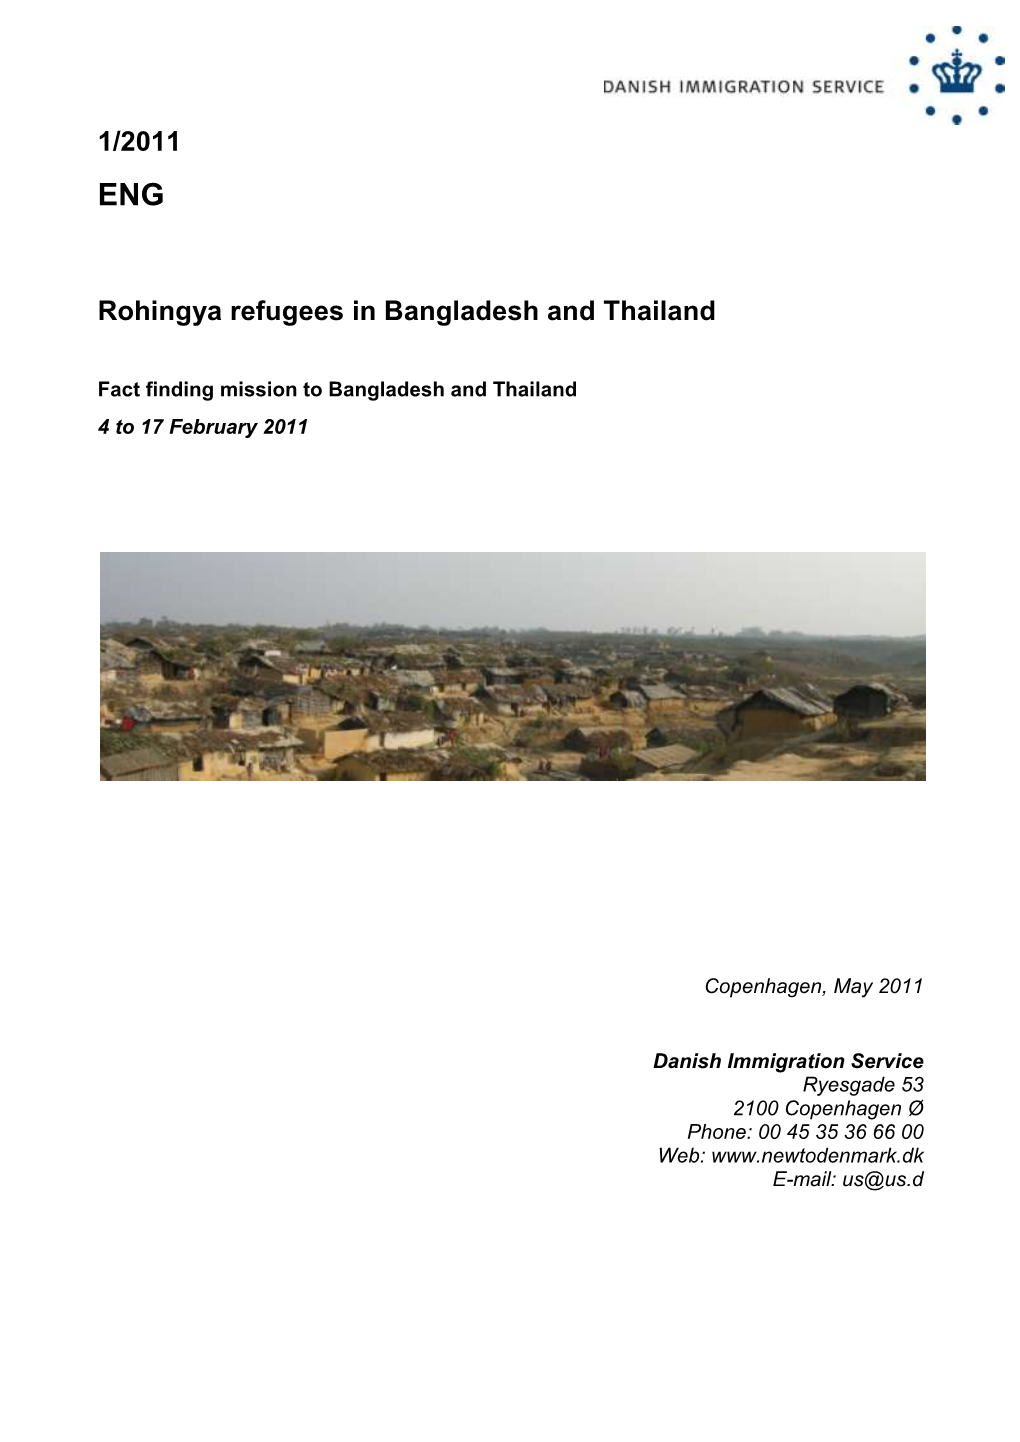 1/2011 Rohingya Refugees in Bangladesh and Thailand